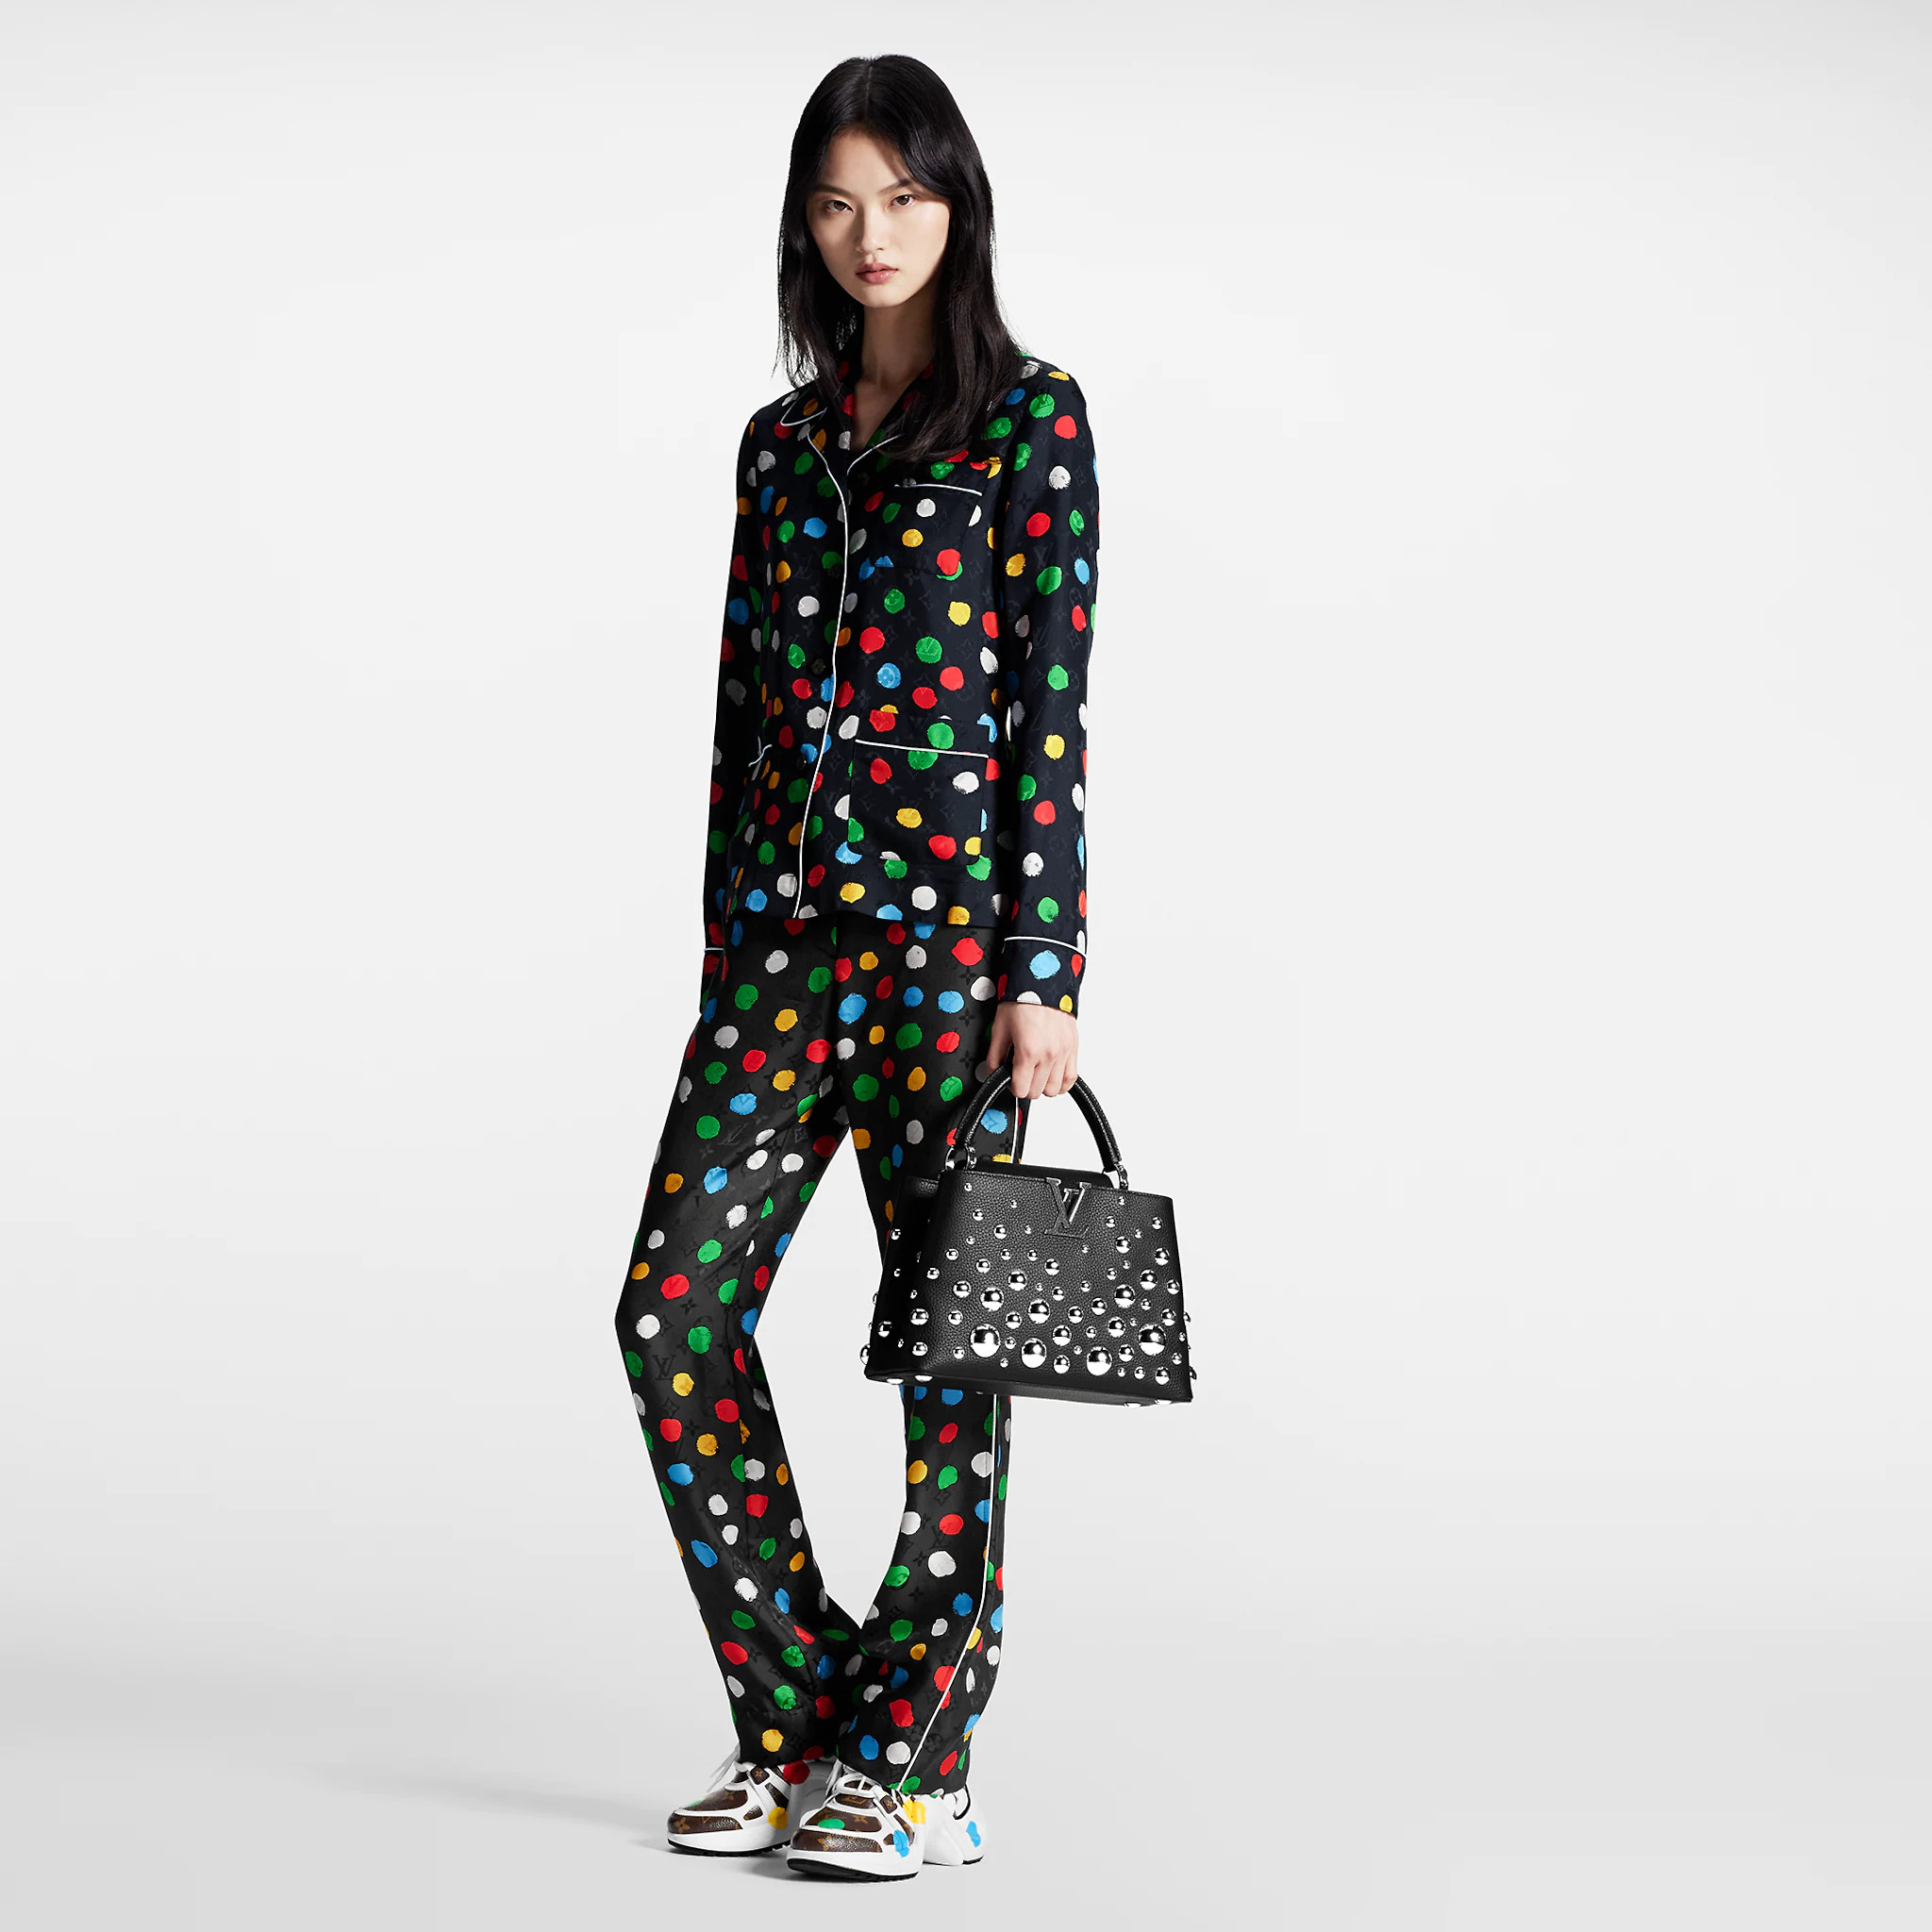 Marian Rivera Wears Louis Vuitton X Yayoi Kusama Pajamas Worth